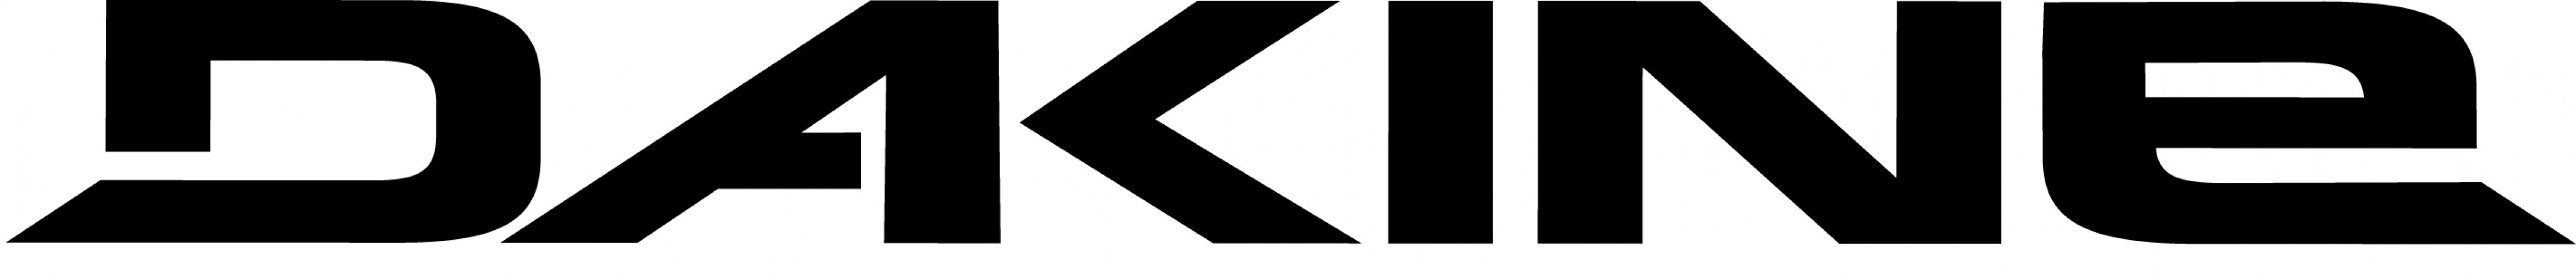 dakine-logo